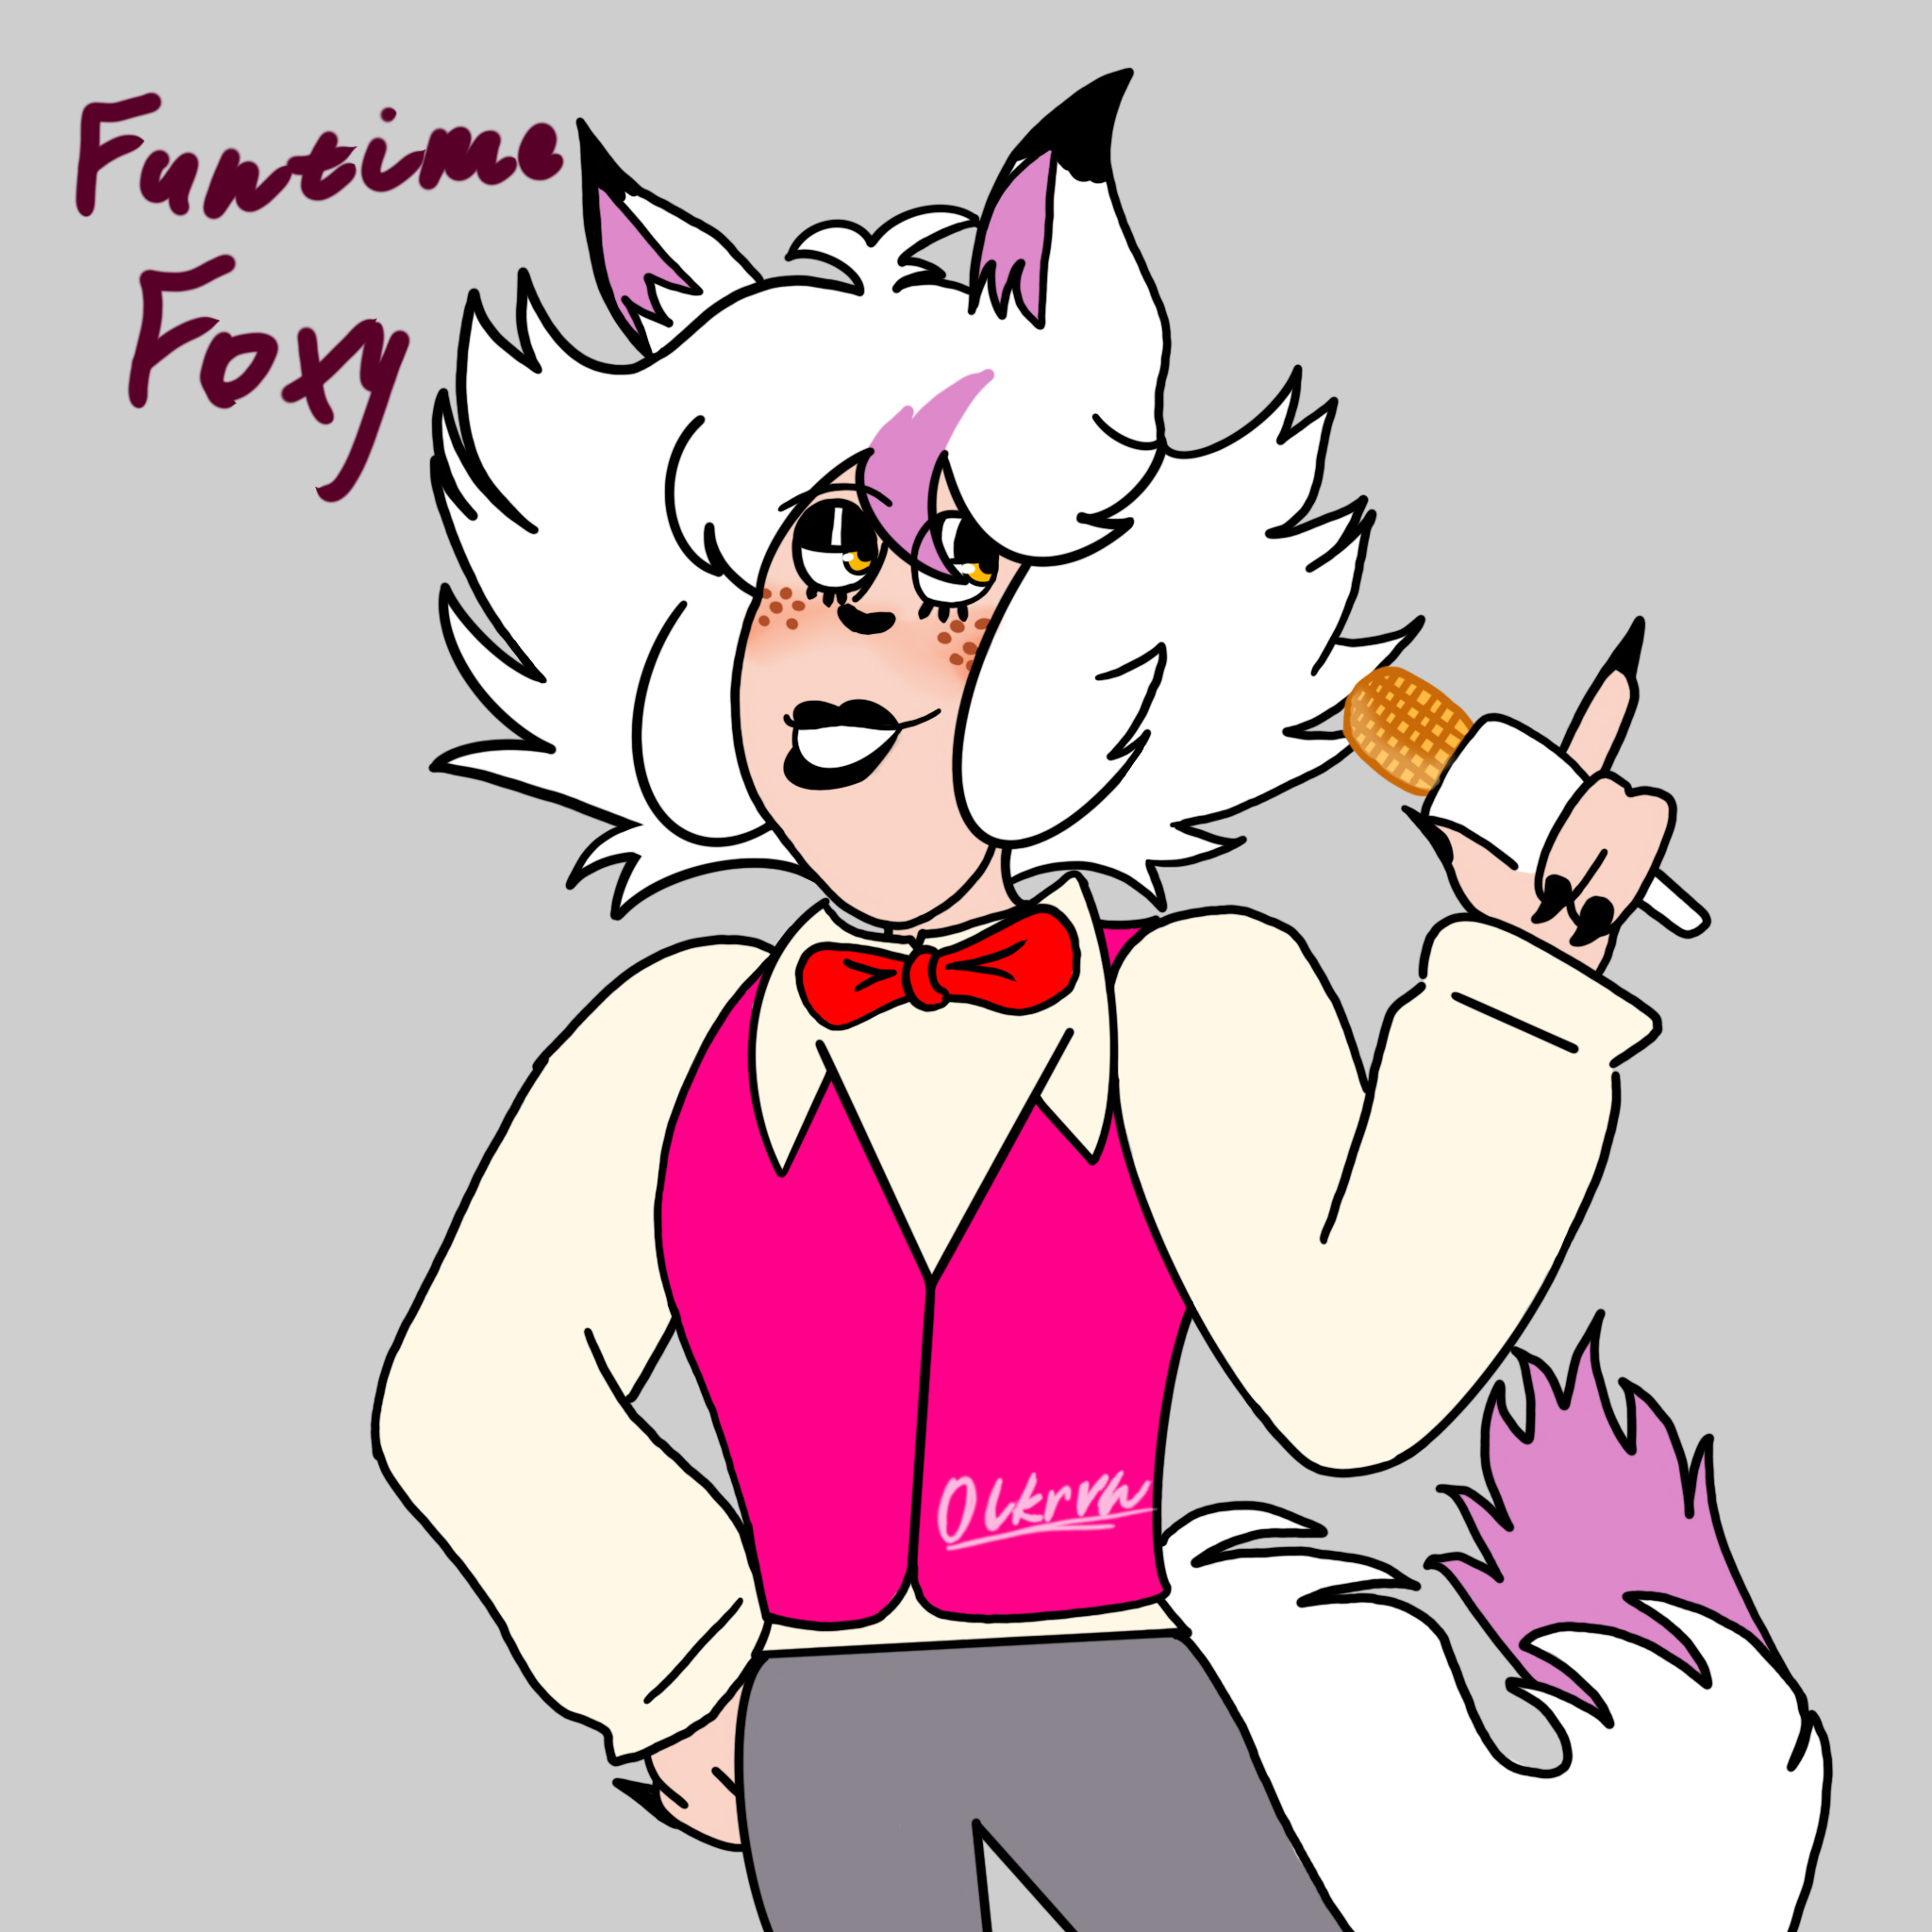 FNAF Foxy SVG free, five nights at Freddy's foxy SVG free